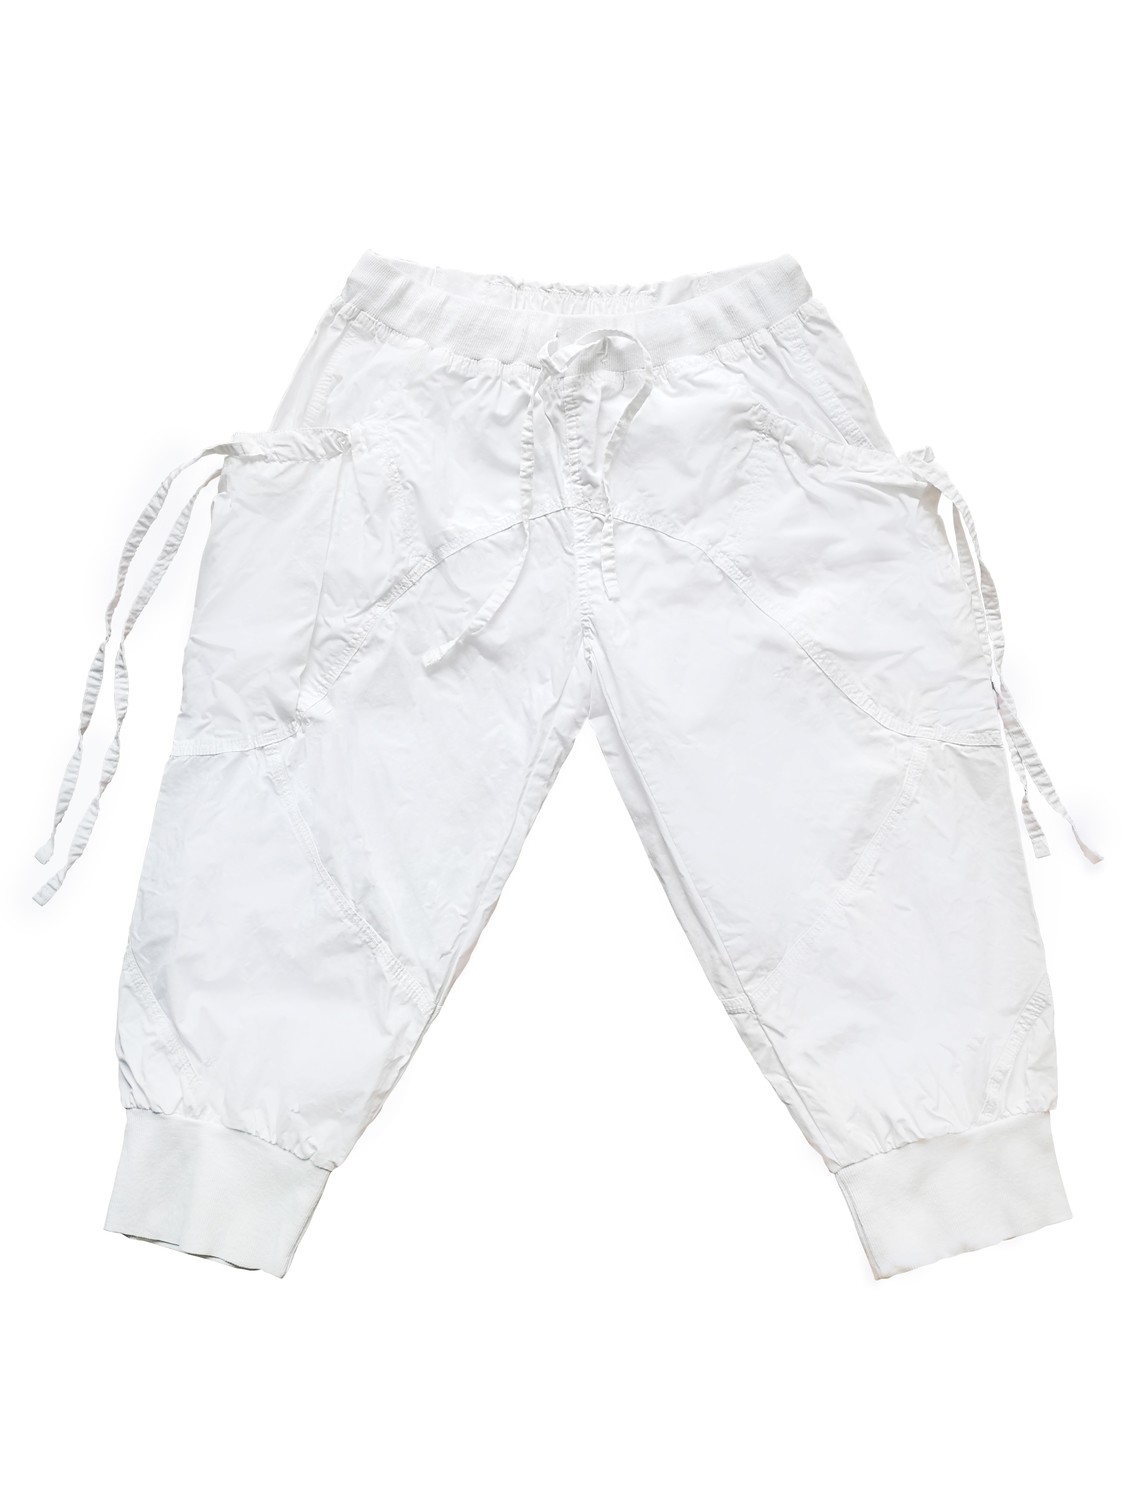 Female white pants